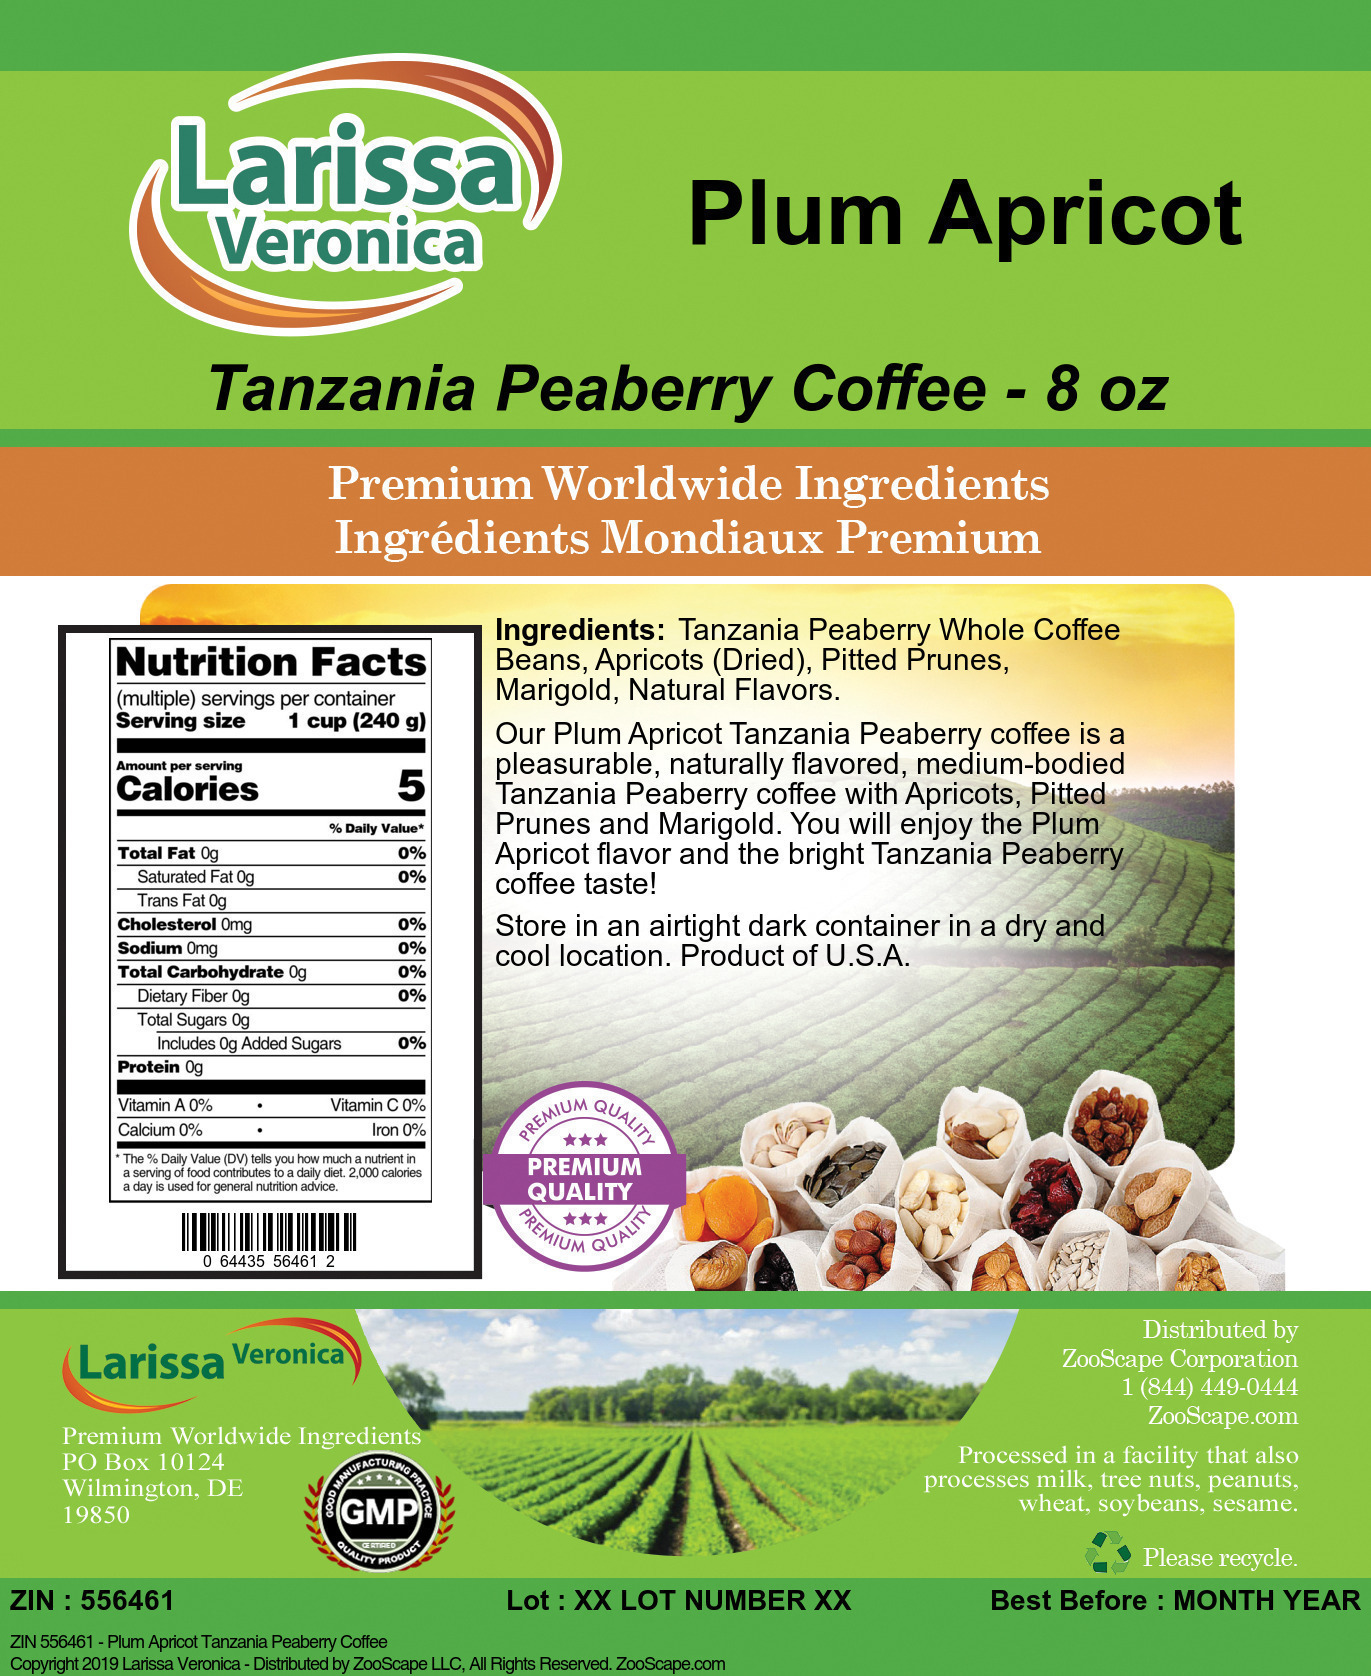 Plum Apricot Tanzania Peaberry Coffee - Label